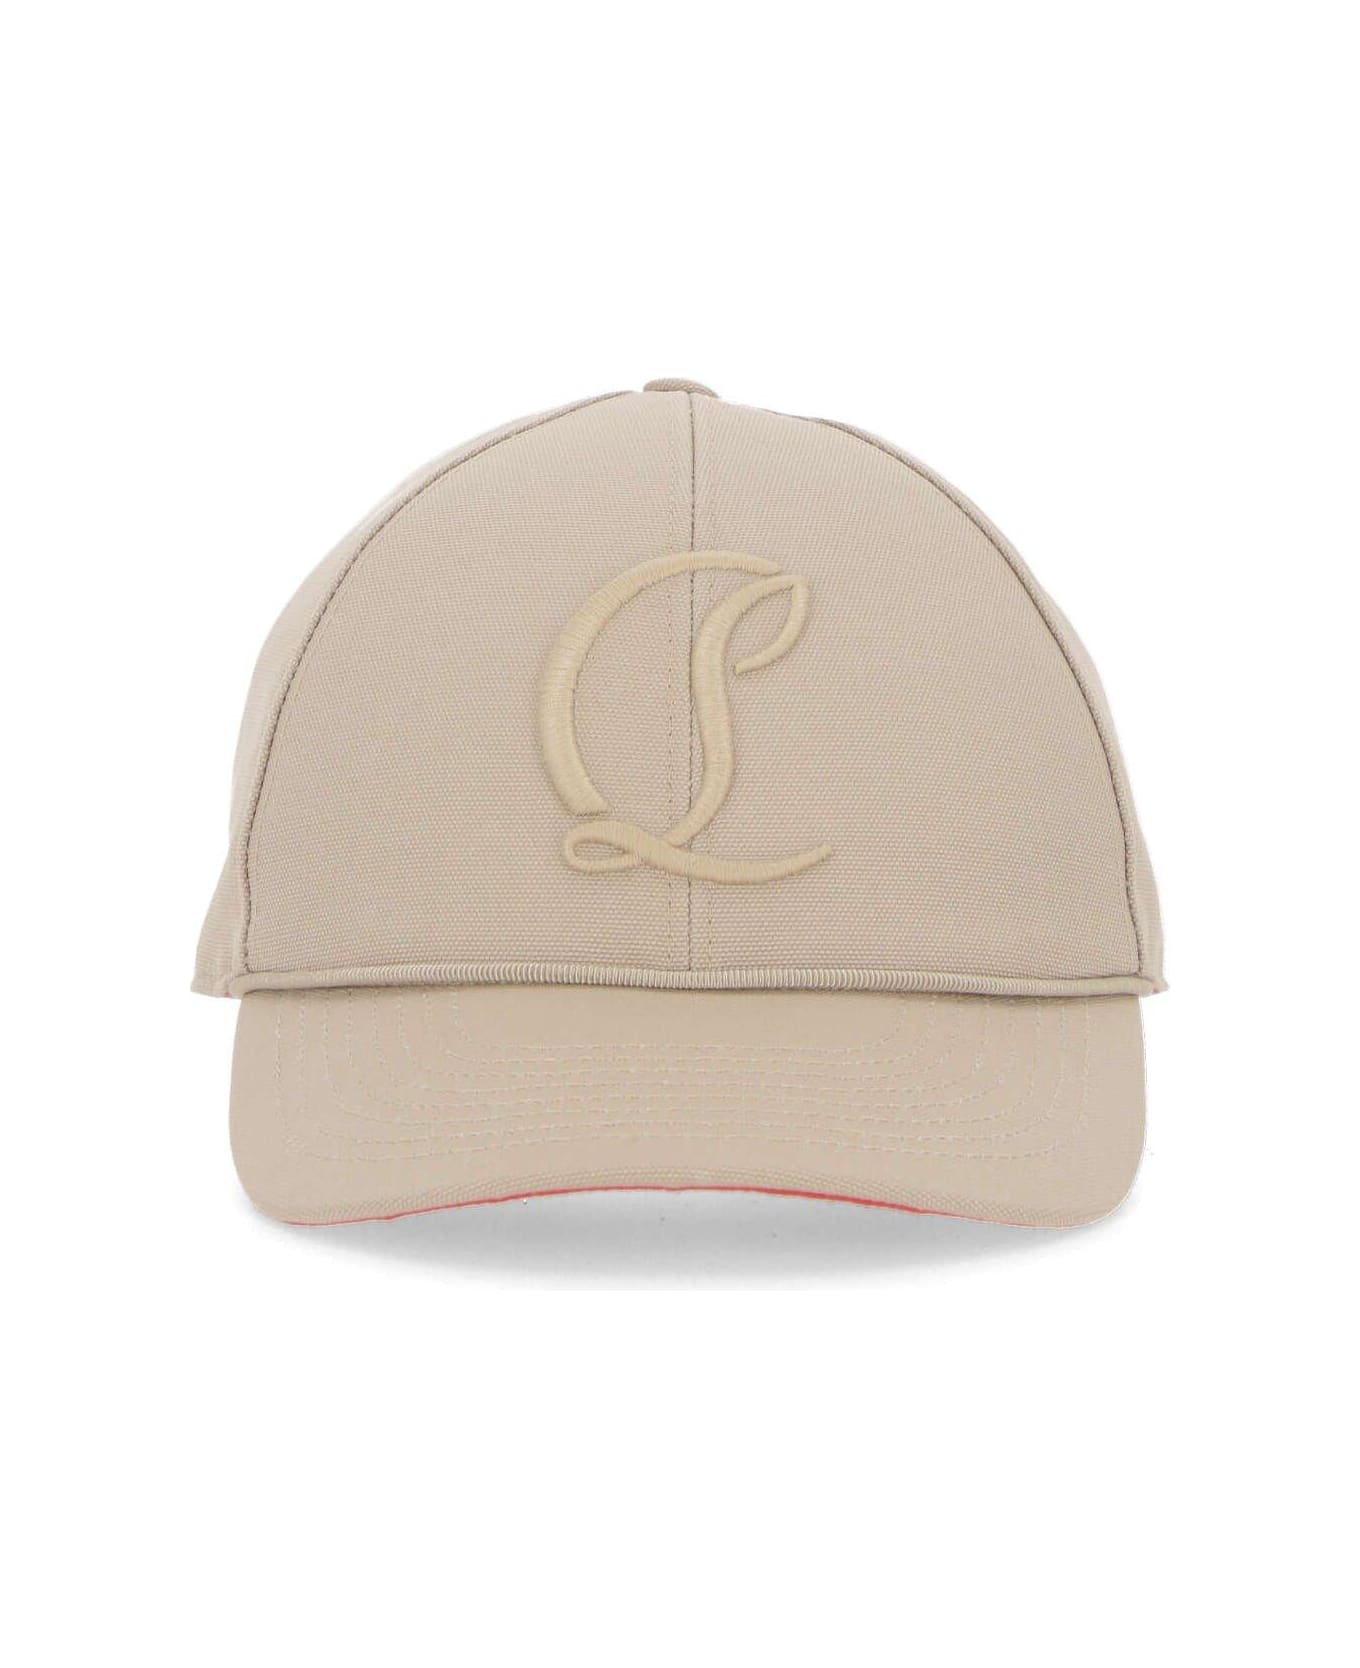 Christian Louboutin Logo Embroidered Baseball Cap - Saharienne/silver